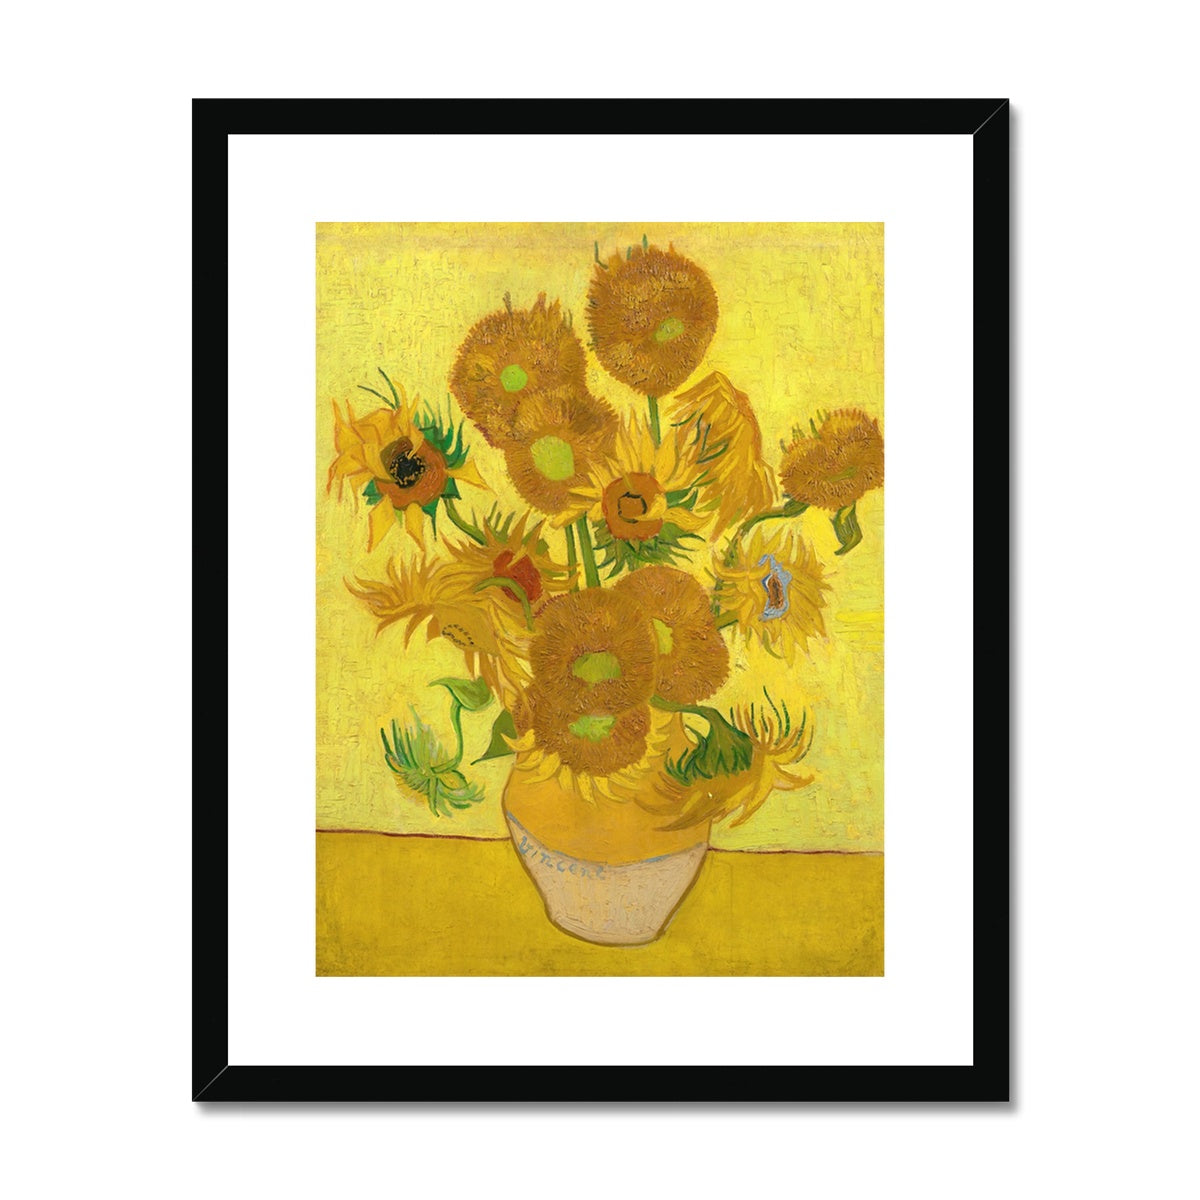 Vincent Van Gogh Framed Open Edition Art Print. 'Sunflowers'. Art Gallery Historic Art